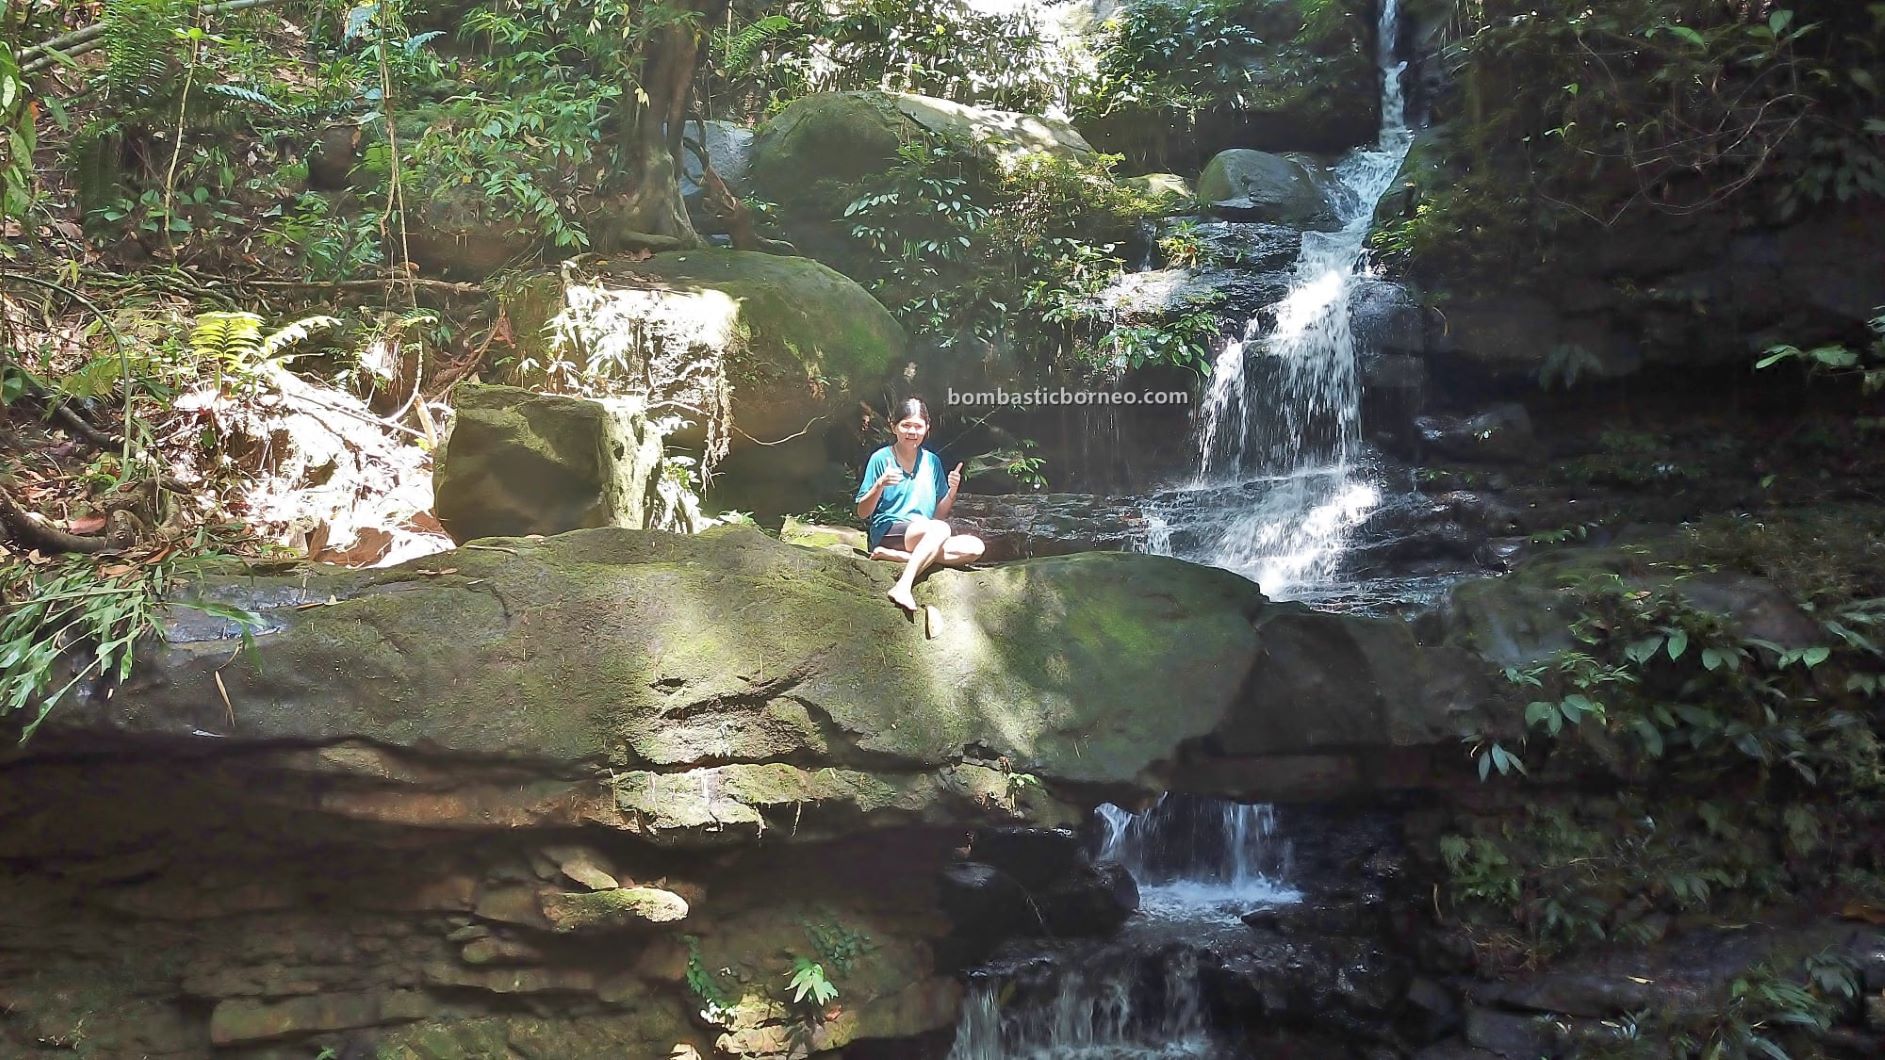 Satow waterfall, Kampung Bobak, adventure, nature, outdoor, hiking, picnic, destination, Malaysia, Tourism, tourist attraction, travel local, 探索婆罗洲游踪, 马来西亚砂拉越大自然. 古晋瀑布旅游景点